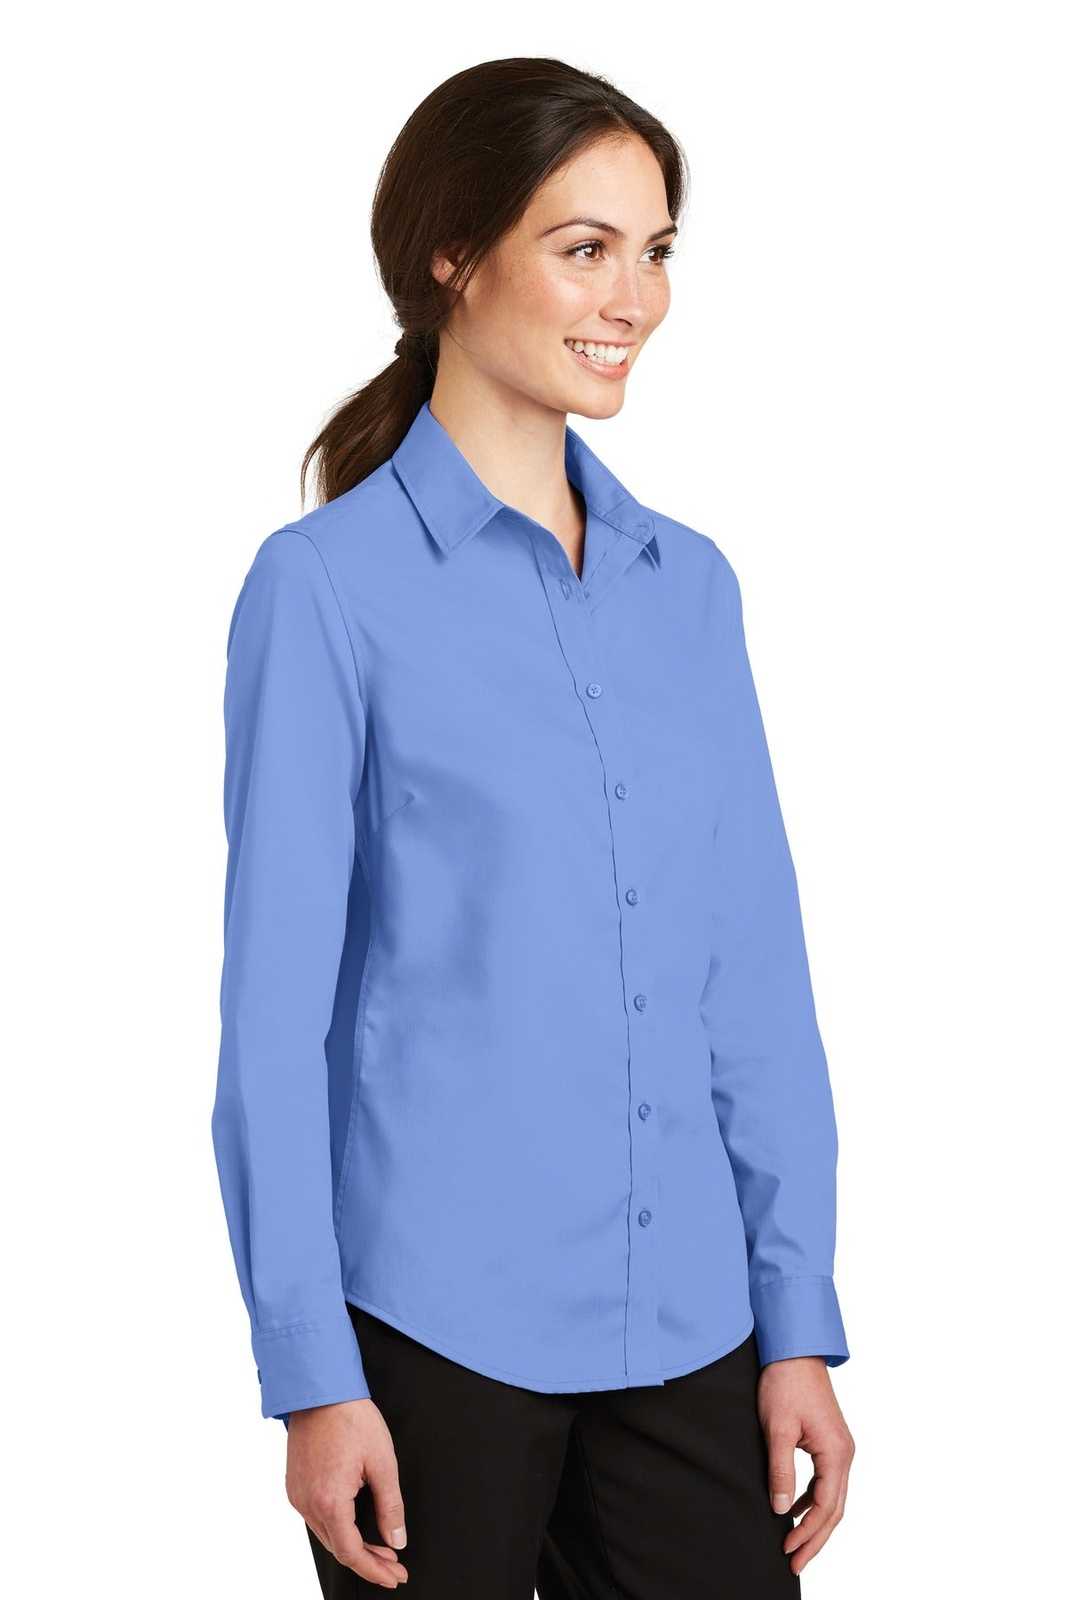 Port Authority L663 Ladies Superpro Twill Shirt - Ultramarine Blue - HIT a Double - 4